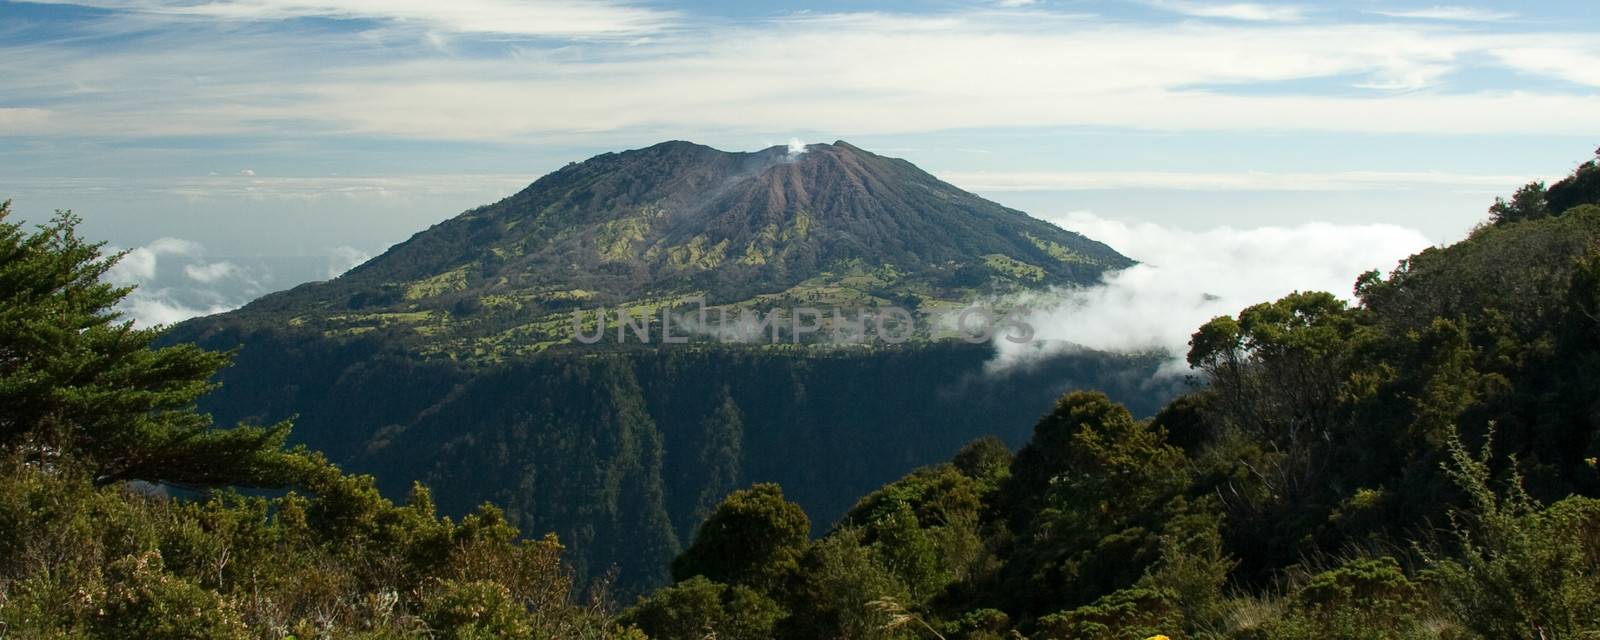 Turrialba Volcano by CelsoDiniz